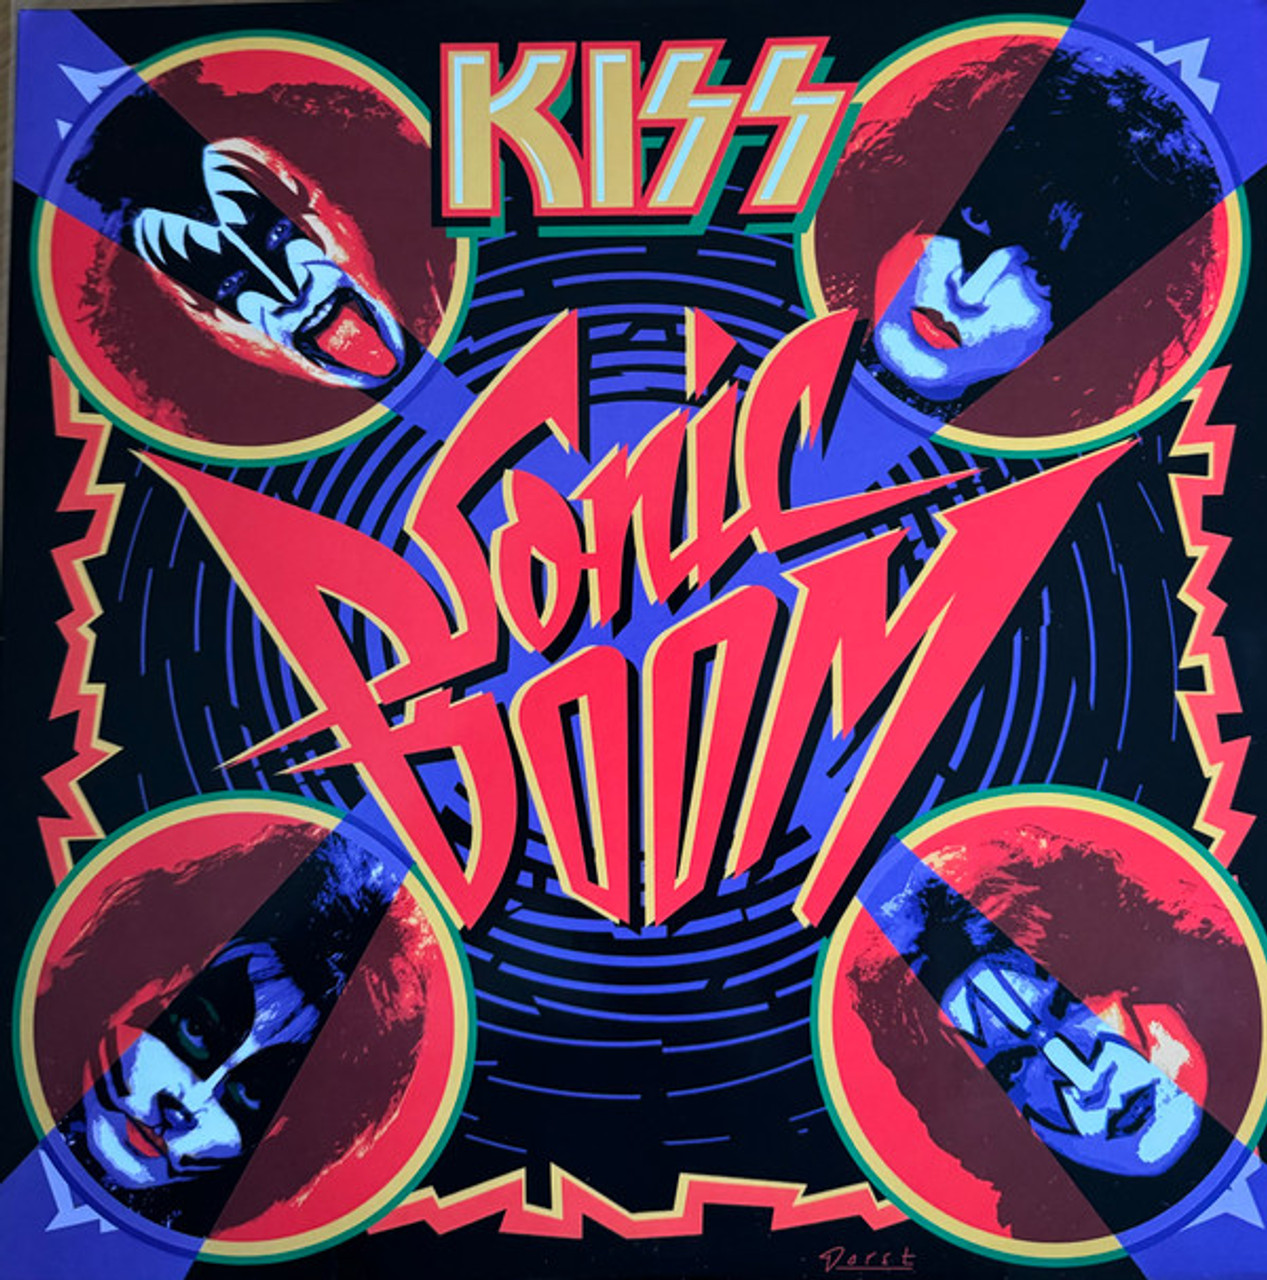 KISS Sonic Boom - New Import LP on Colored Vinyl w/Gatefold Cover -  PlanetMusic33.com